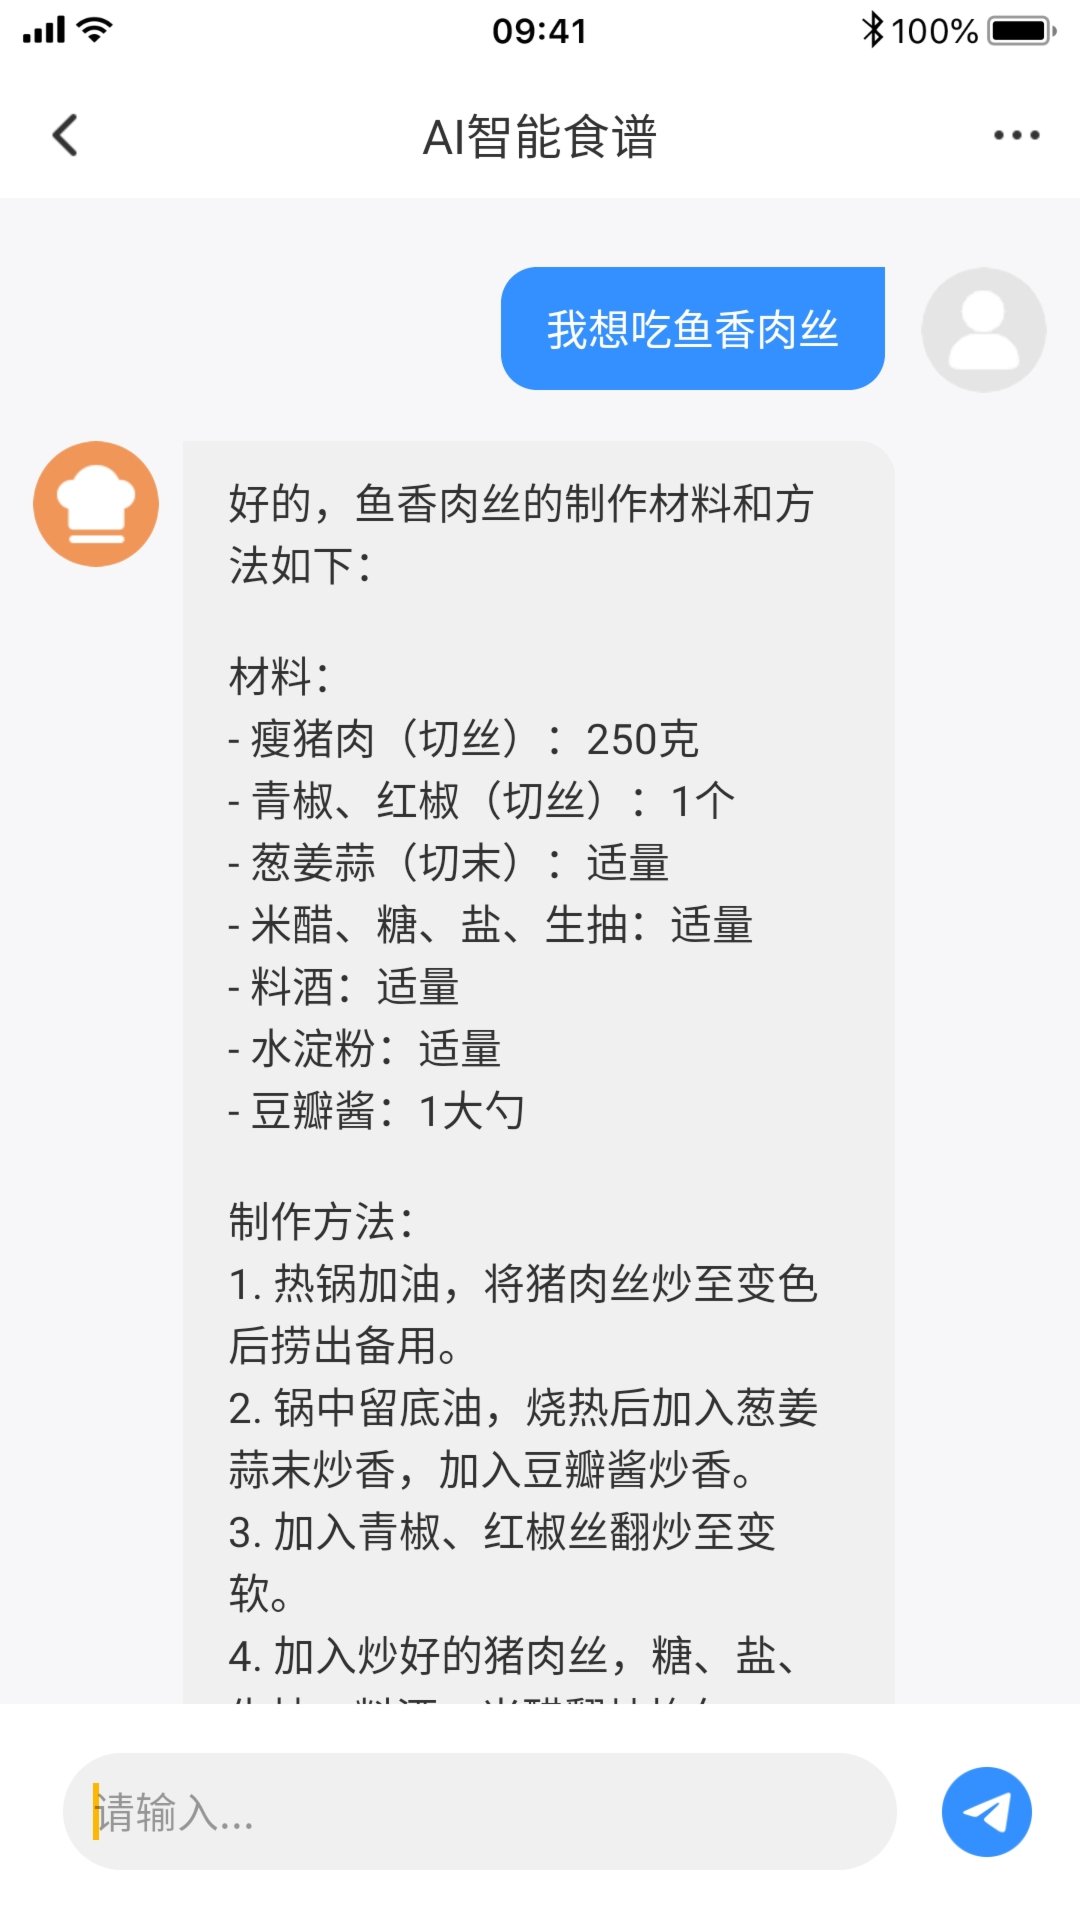 ChatAI智能互动助手APP官方版图2: